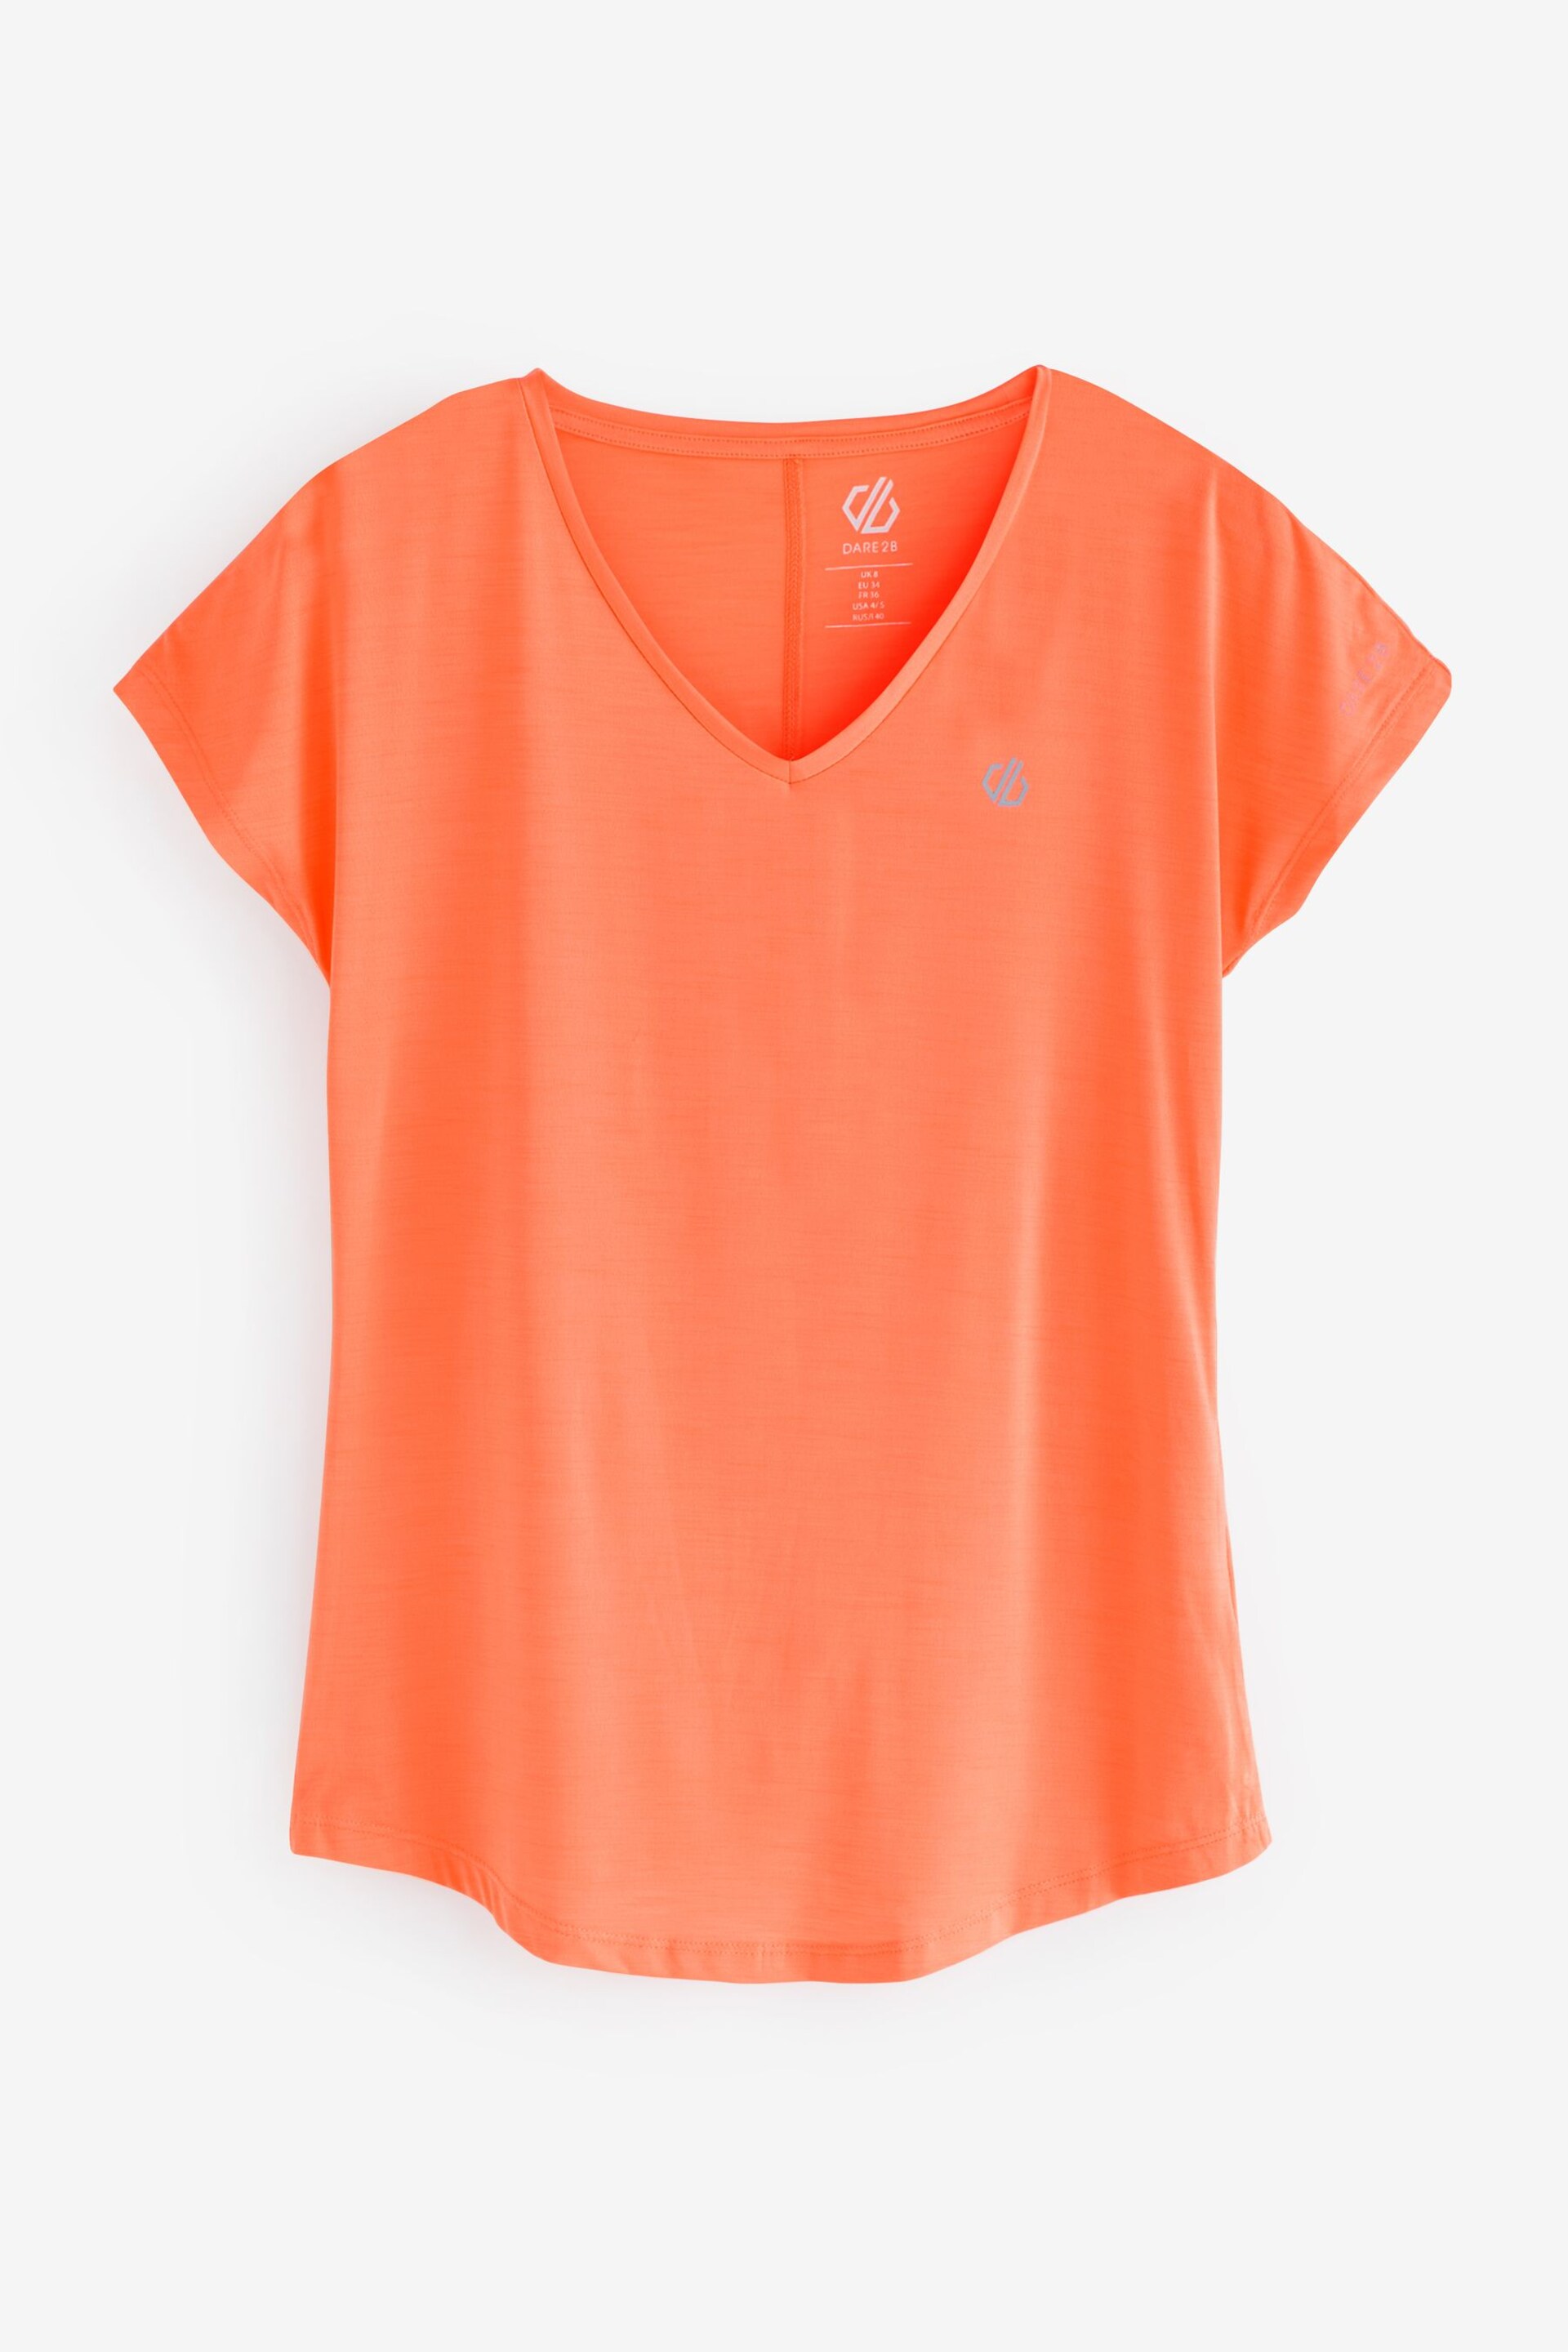 Dare 2b Orange Vigilant Lightweight T-Shirt - Image 1 of 2